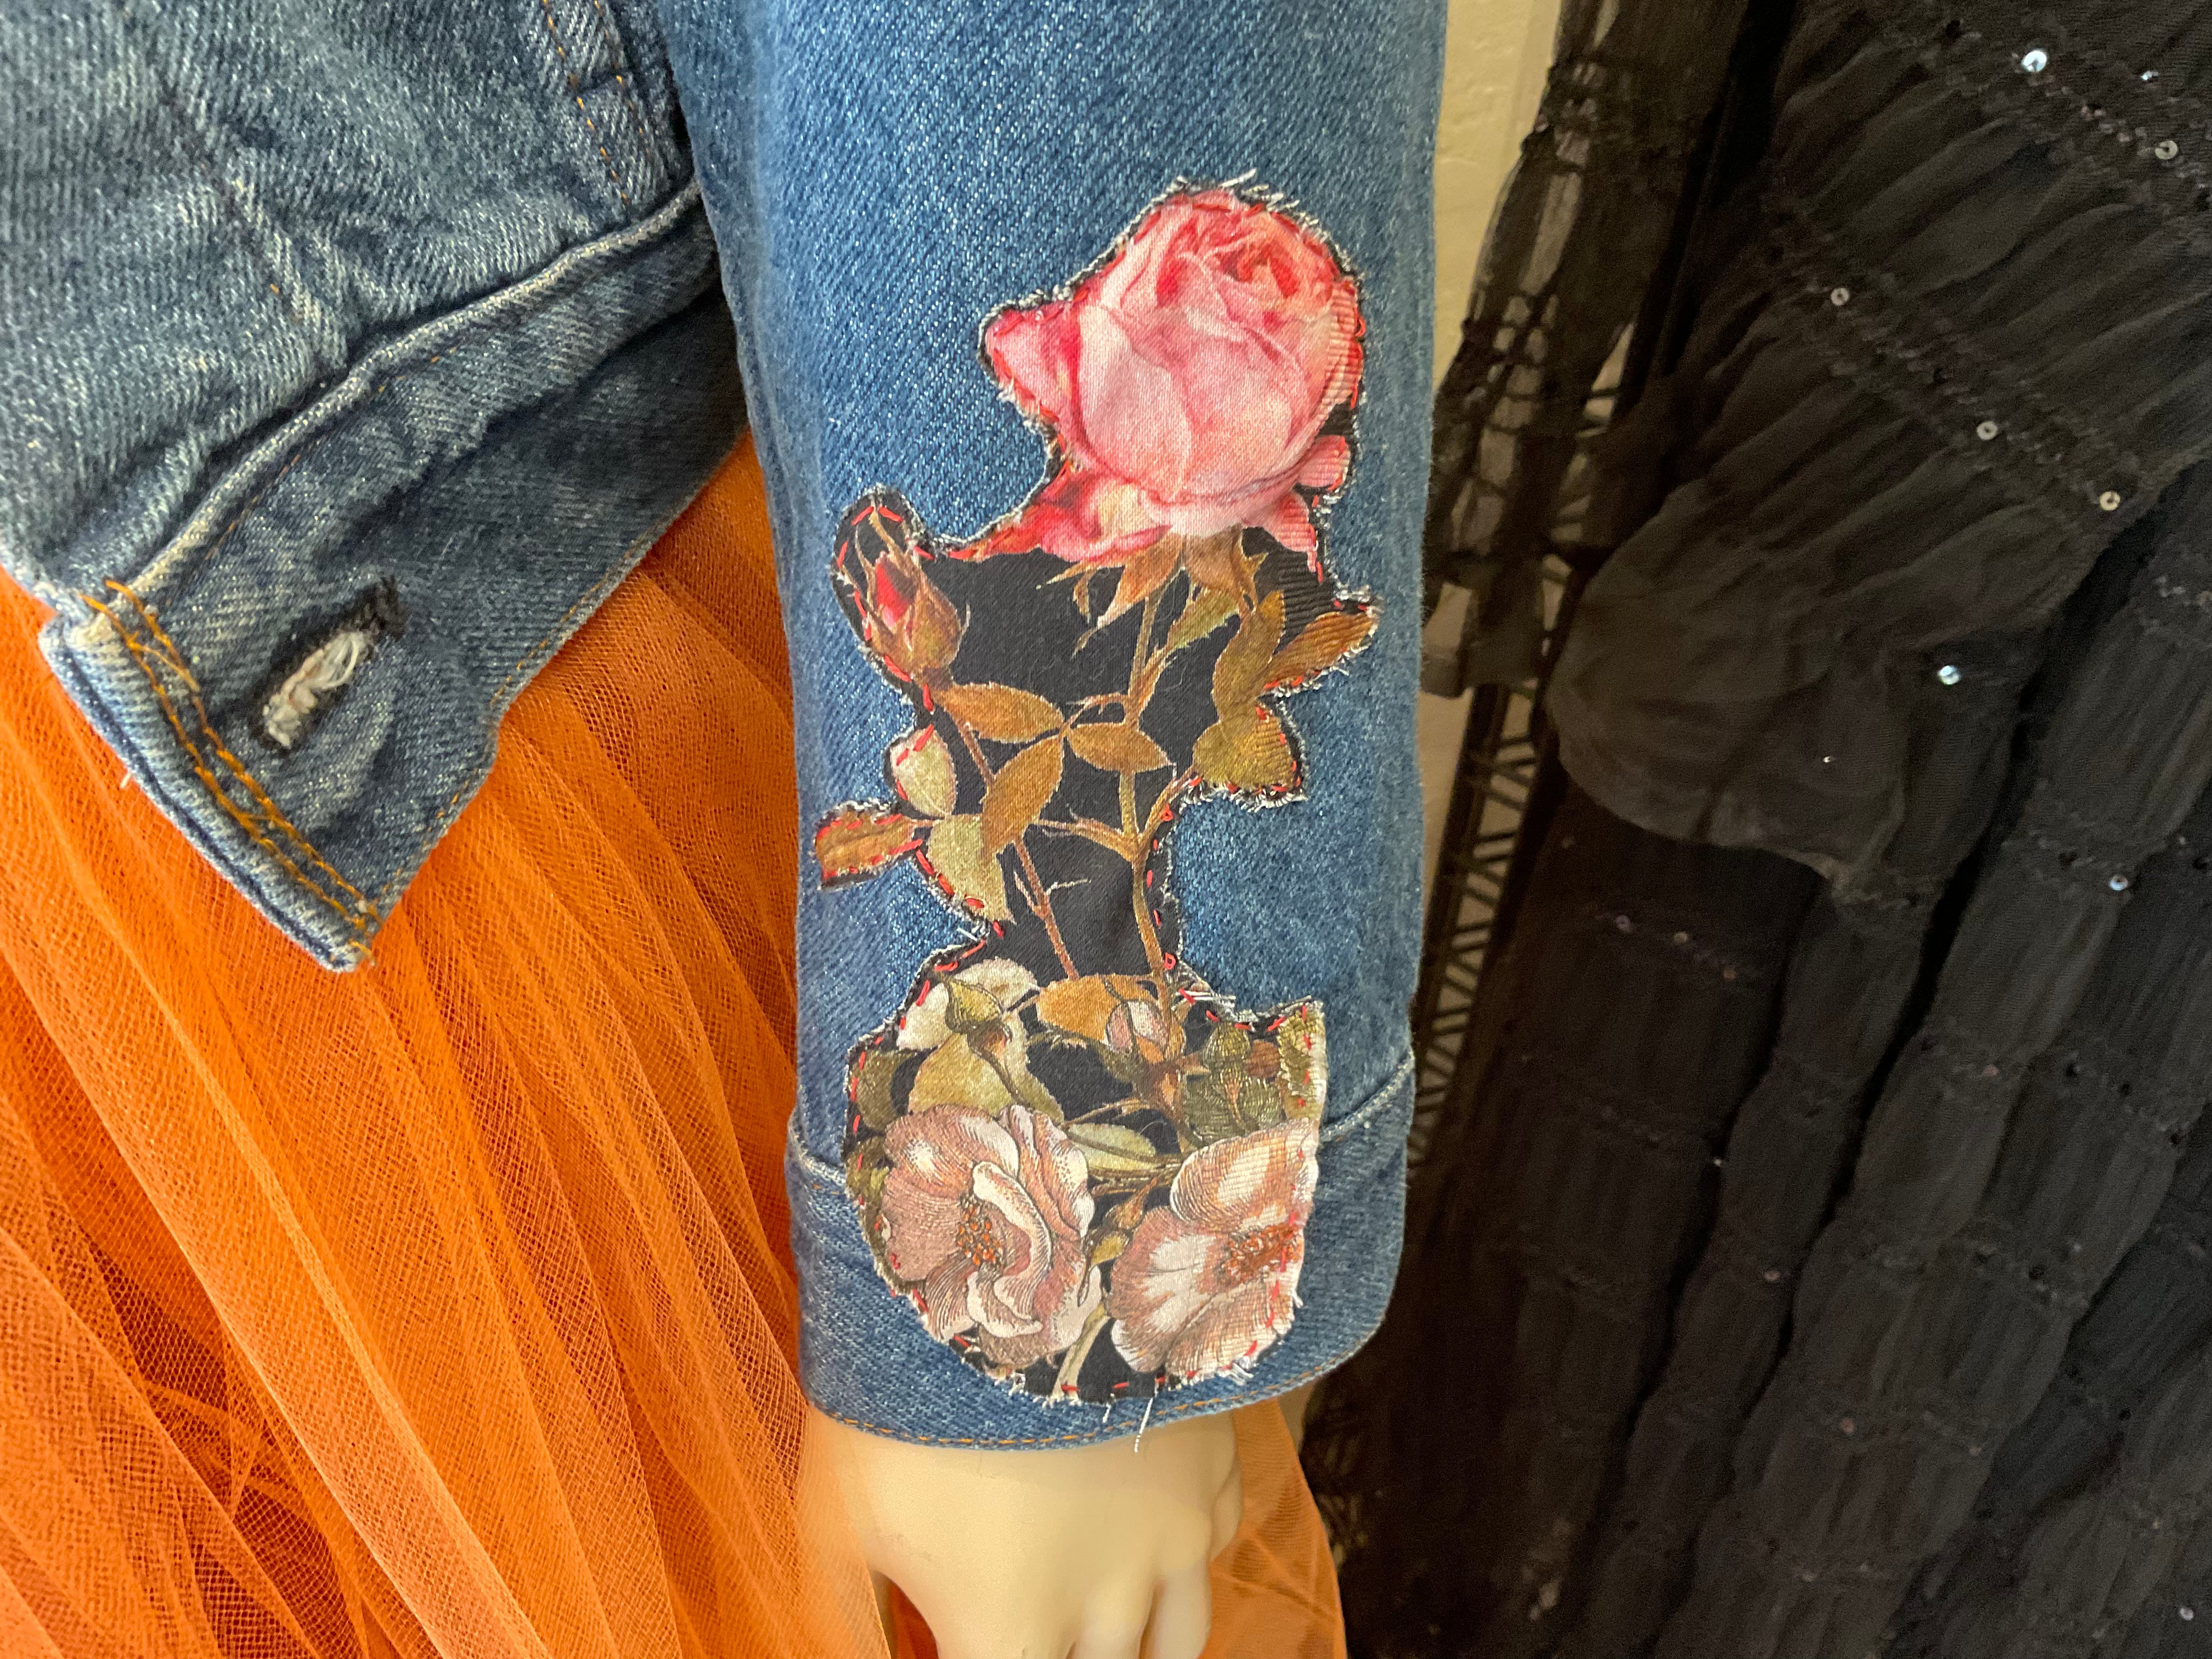 Embroidery embellished Jean jacket